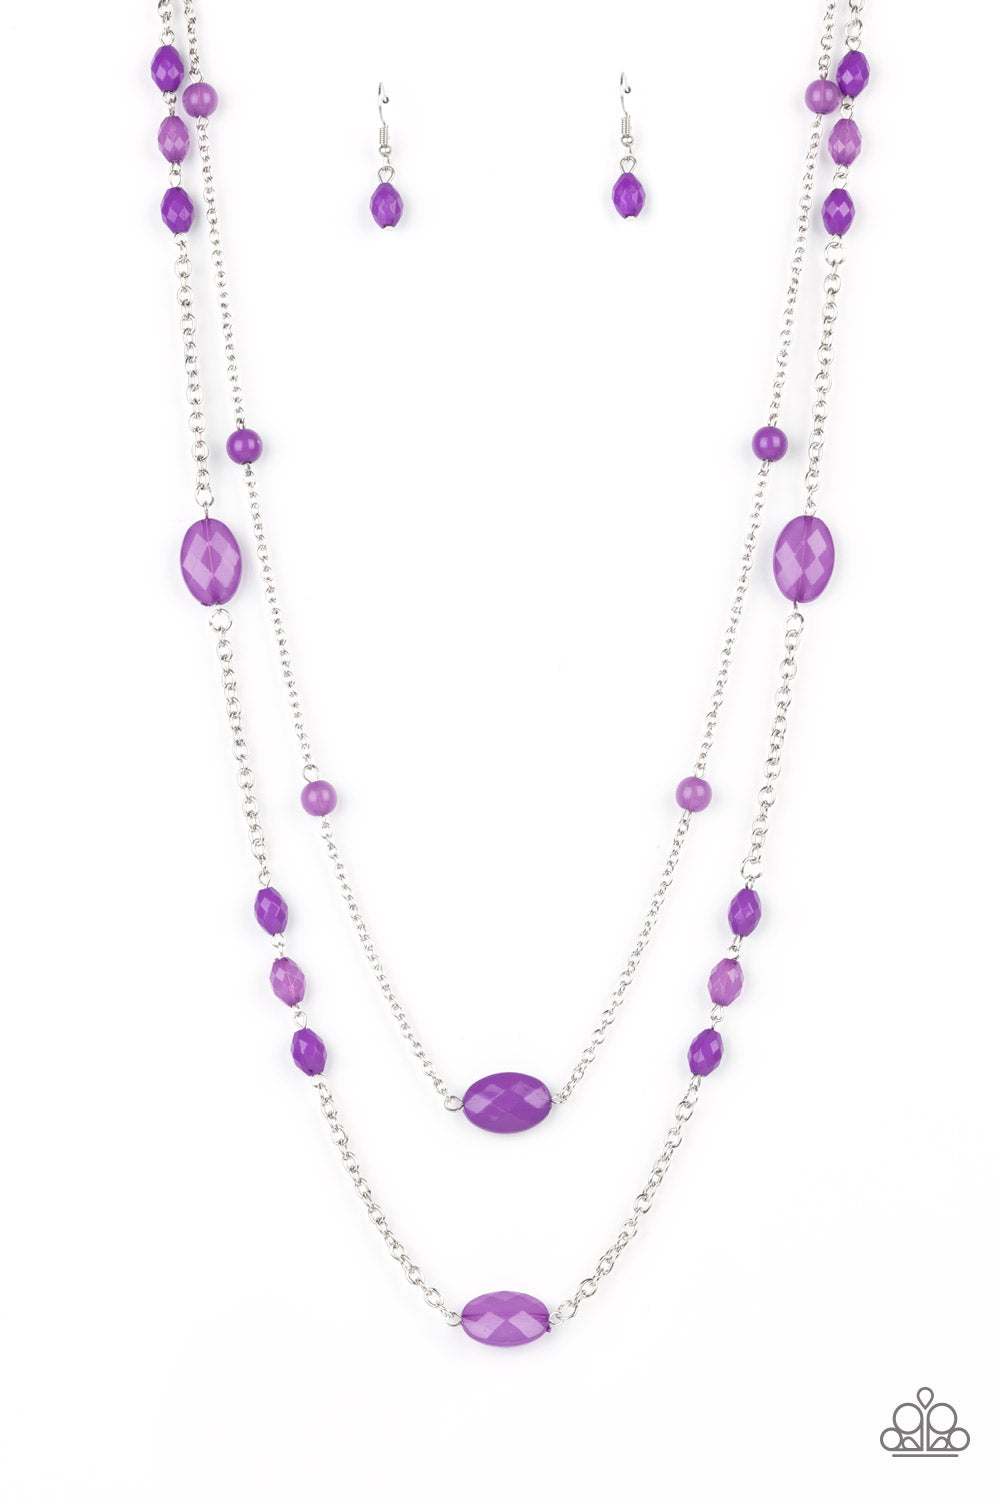 Purple Pearls Layered Necklace, Beadwork Bib in Deep Royal Purple, Dark  Amethyst Purple Long Necklace, Handmade Artisan Original